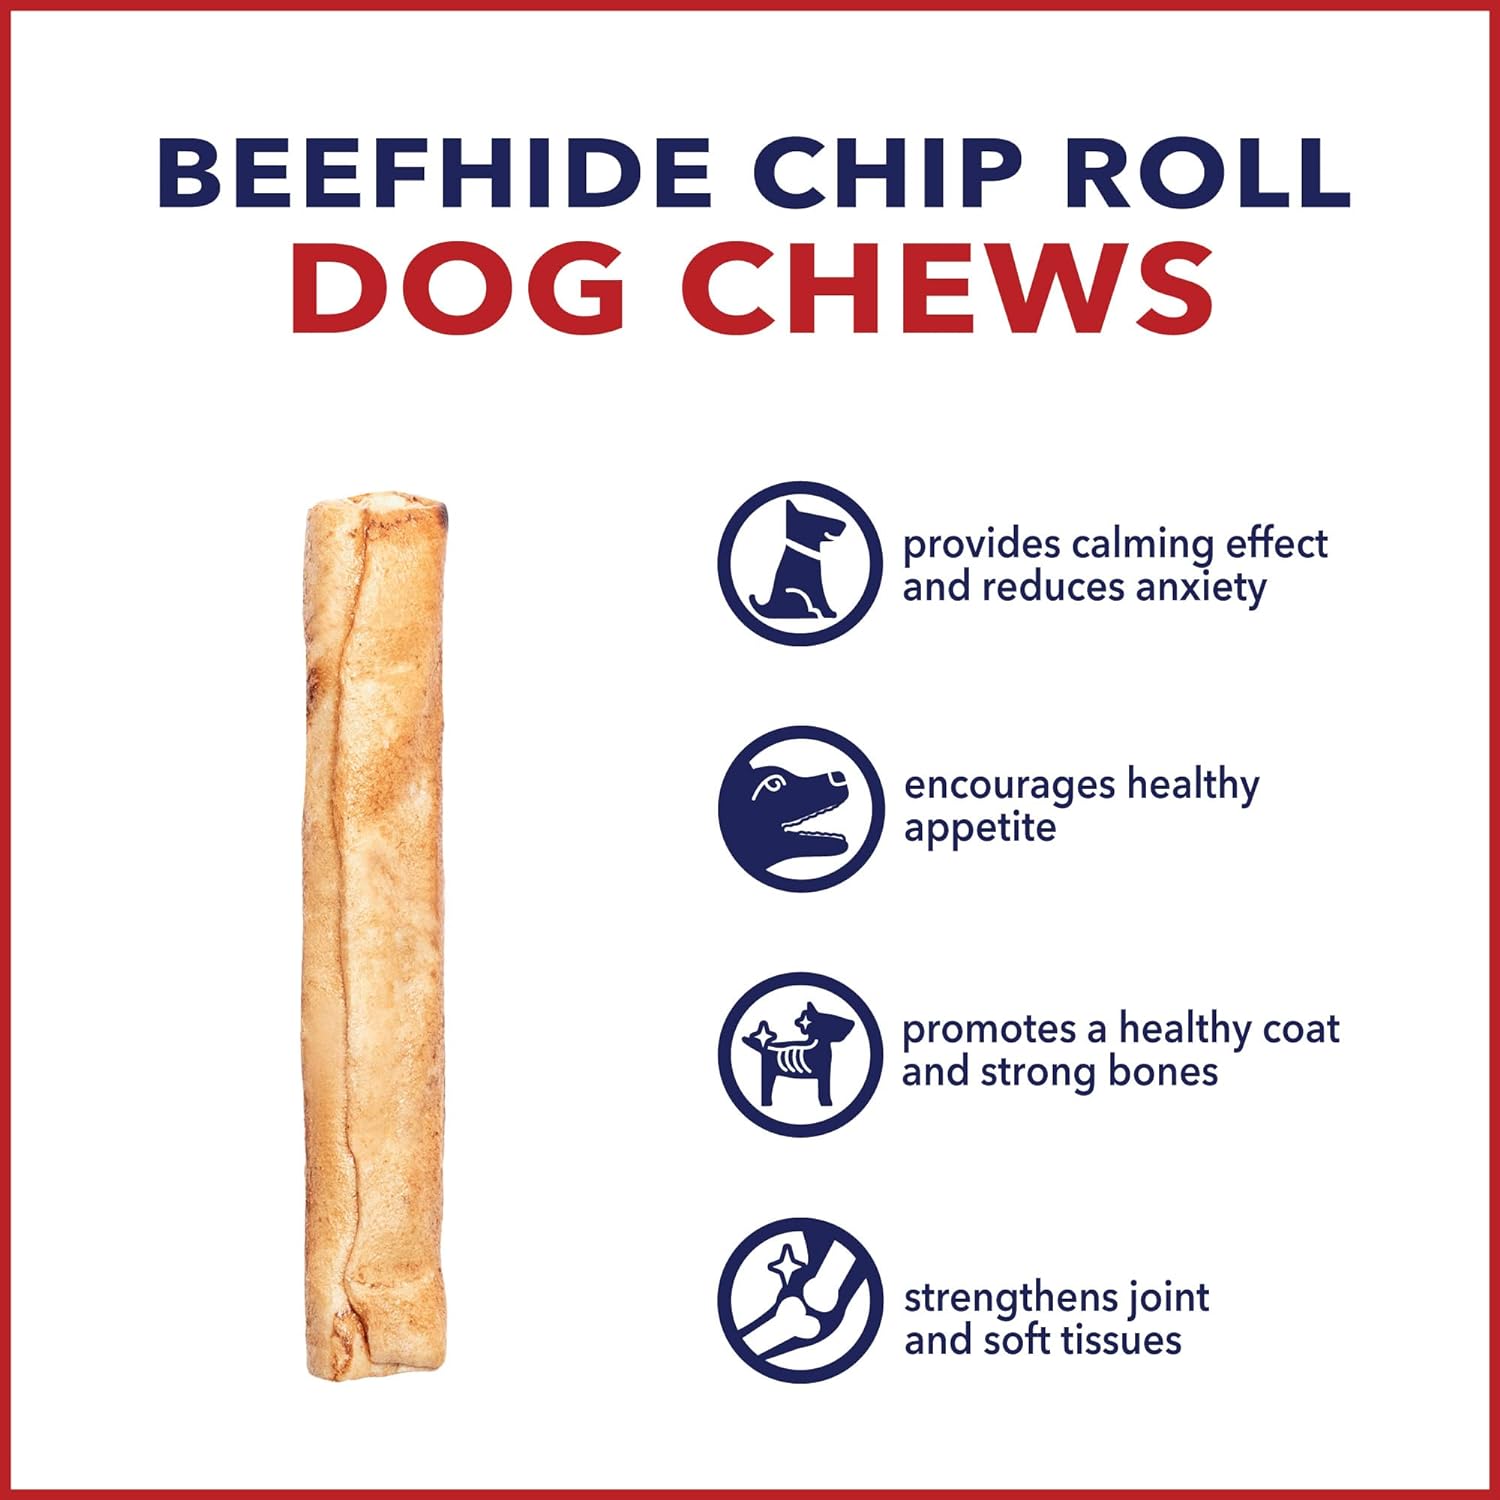 Pet Factory American Beefhide 5" Chip Rolls Dog Chew Treats - Chicken Flavor, 16 Count/1 Pack : Pet Supplies